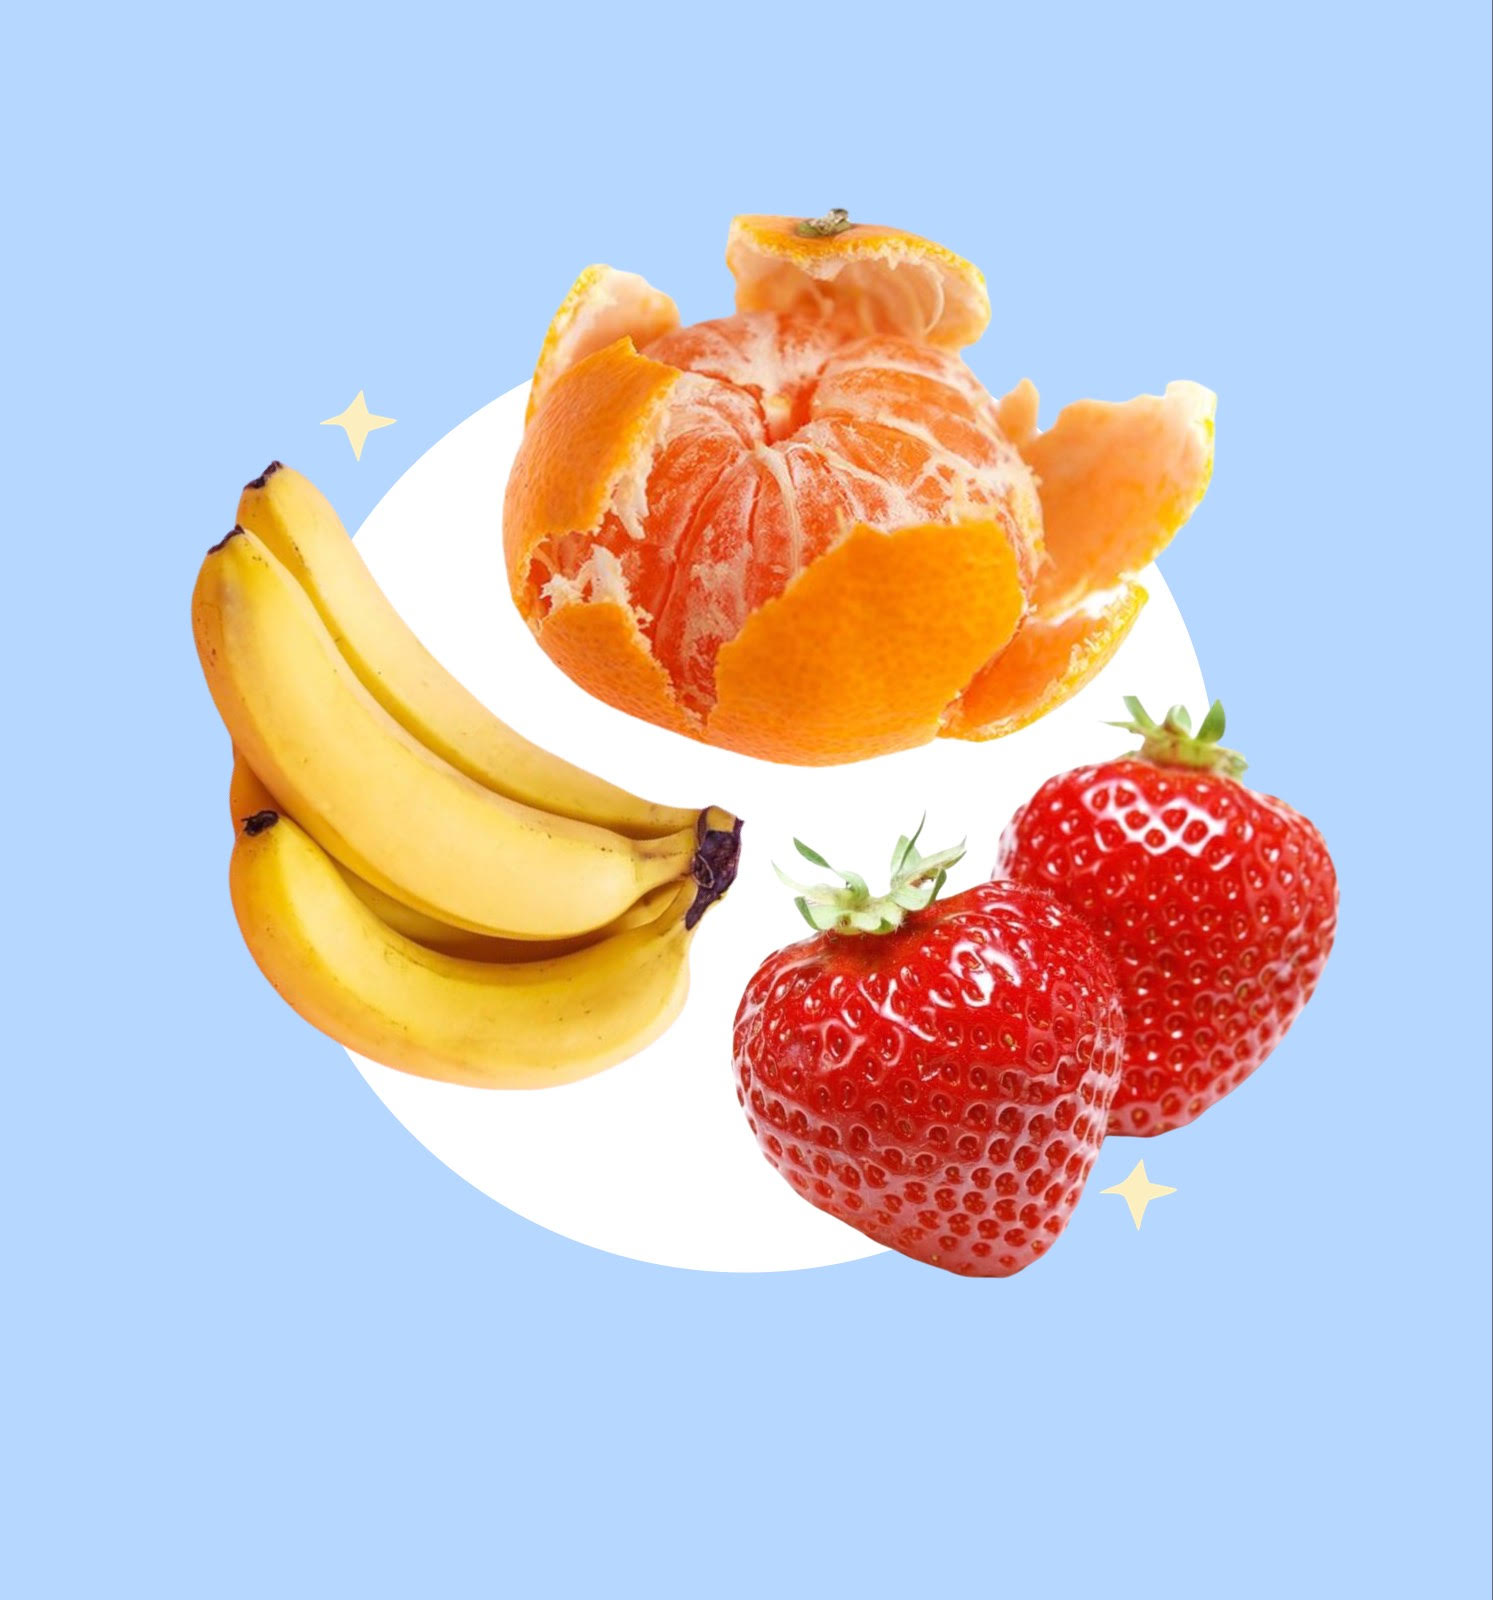 10 popular fruits